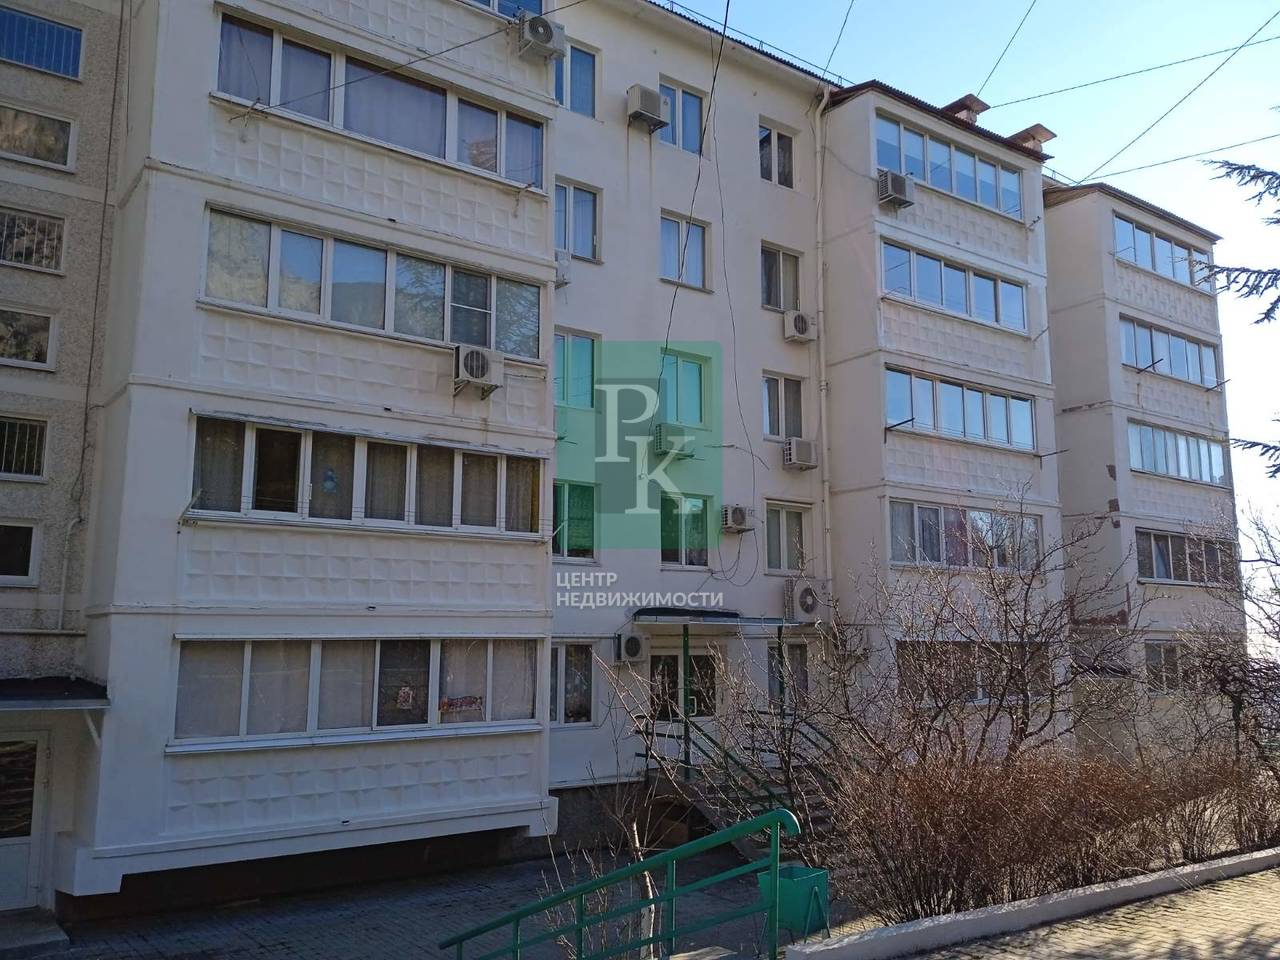 Двухкомнатная квартира 52,1 м2 на улице Гагарина